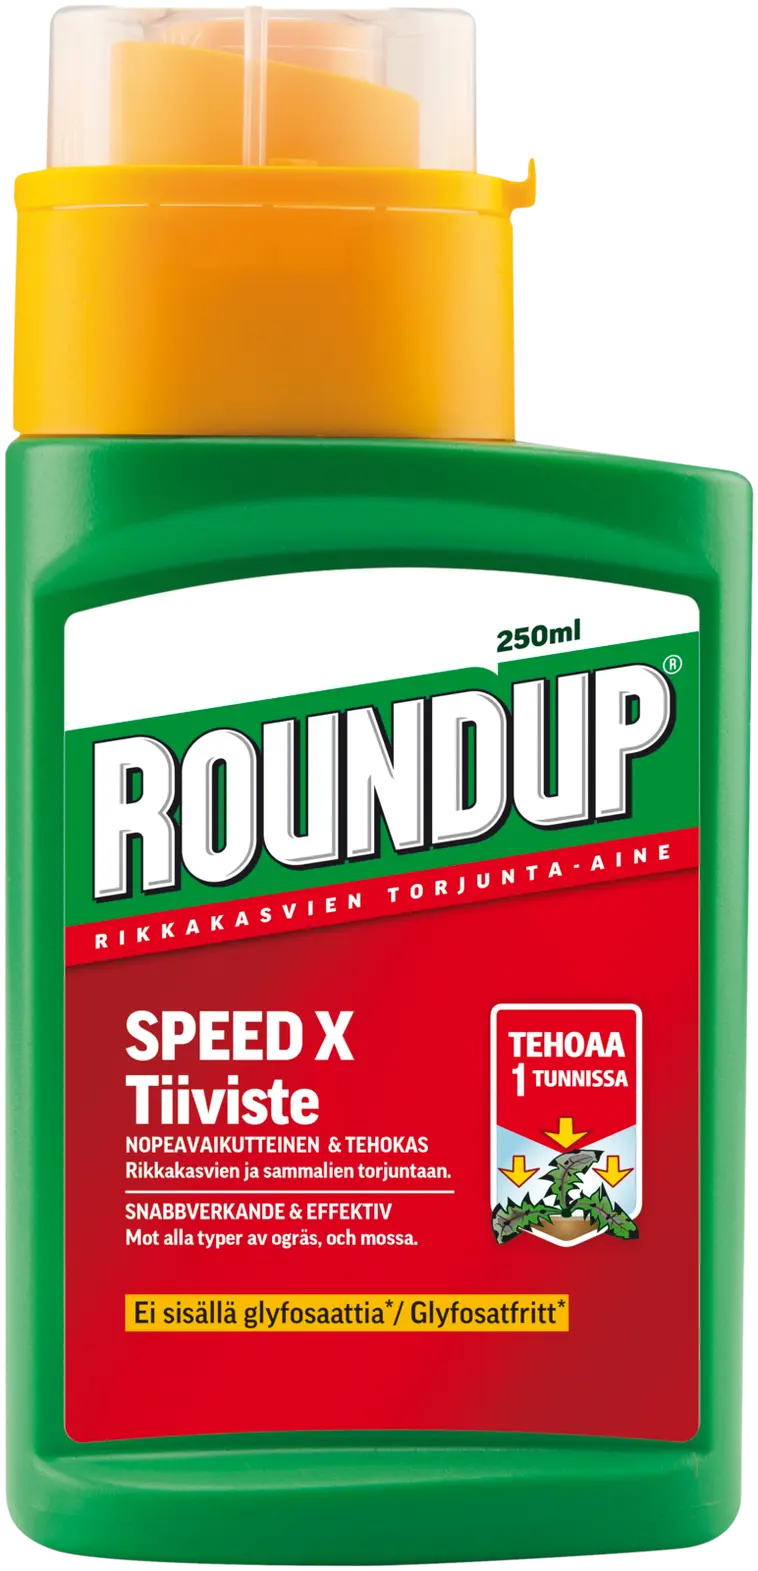 Roundup Speed X 250 ml Rikkakasvien torjunta-aine